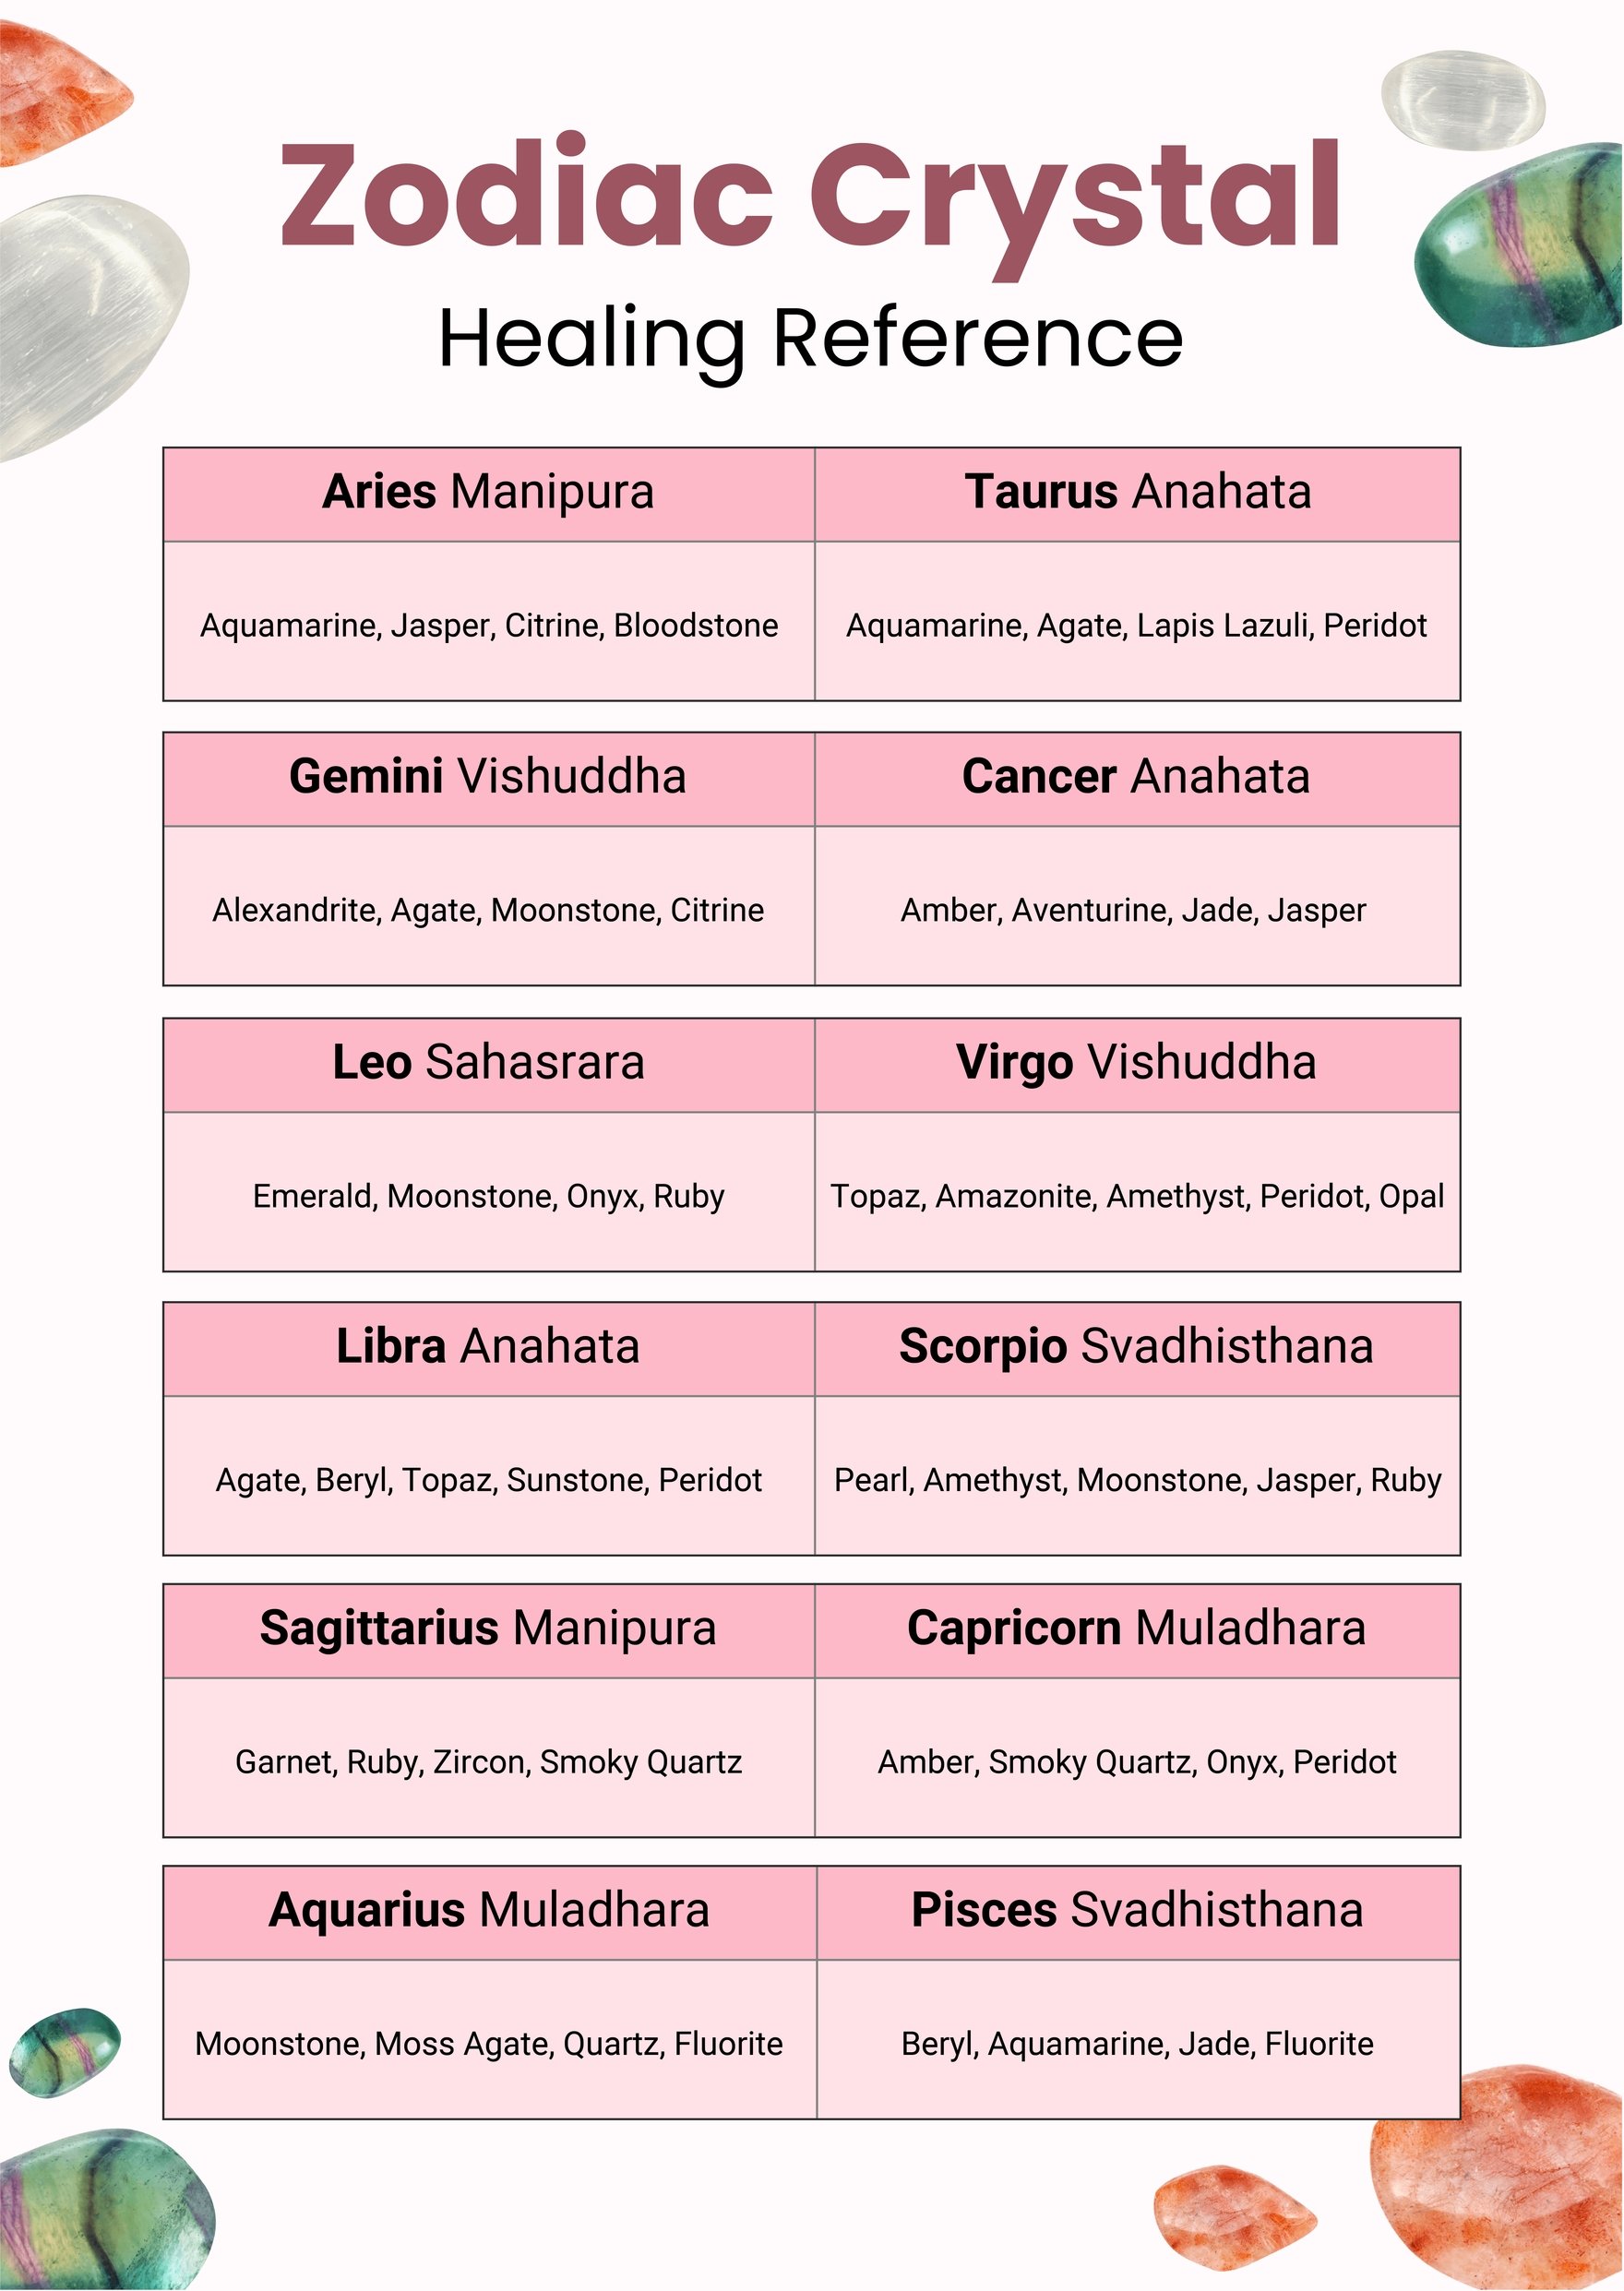 Zodiac Crystal Healing Reference Chart Rrmkx 